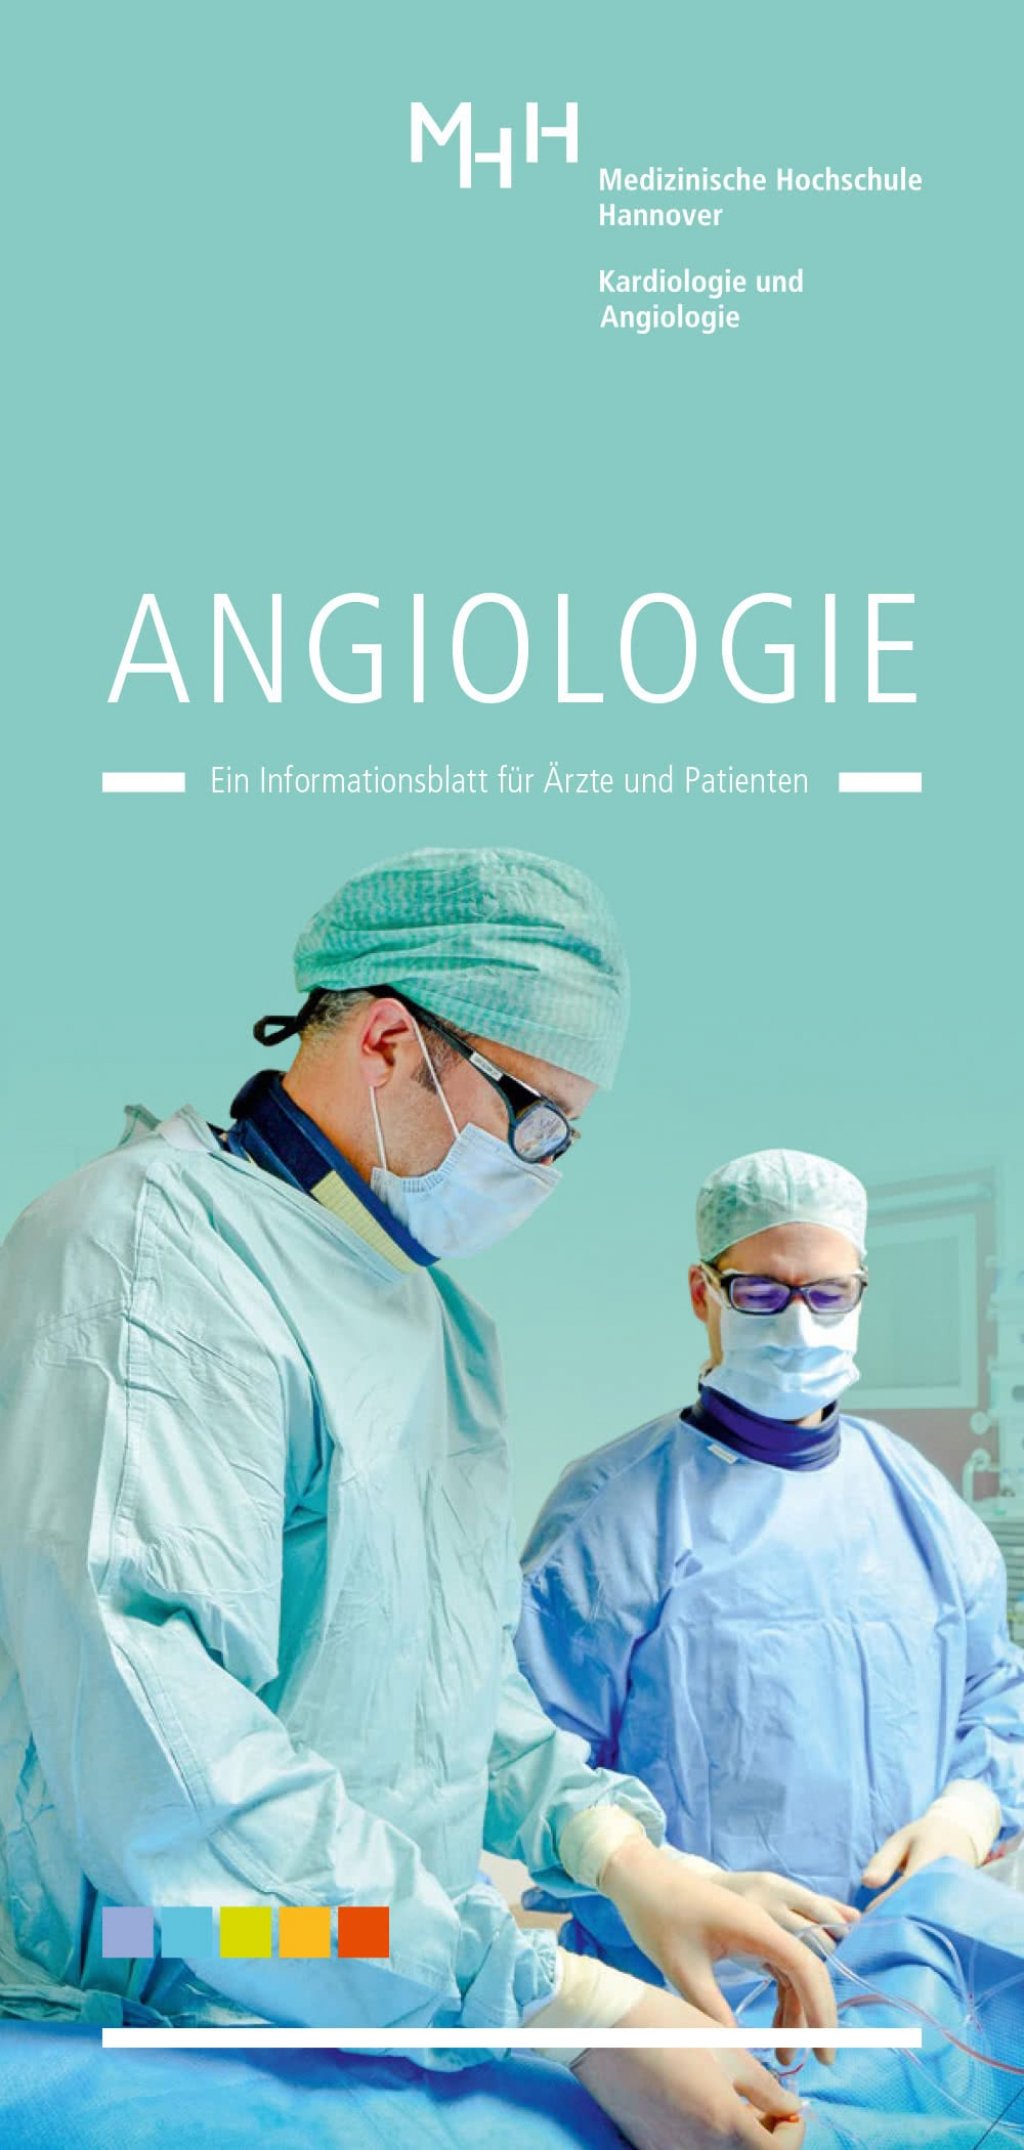 MHH-Kardiologie-Interventionelle-Angiologie-Flyer-7e9975bd